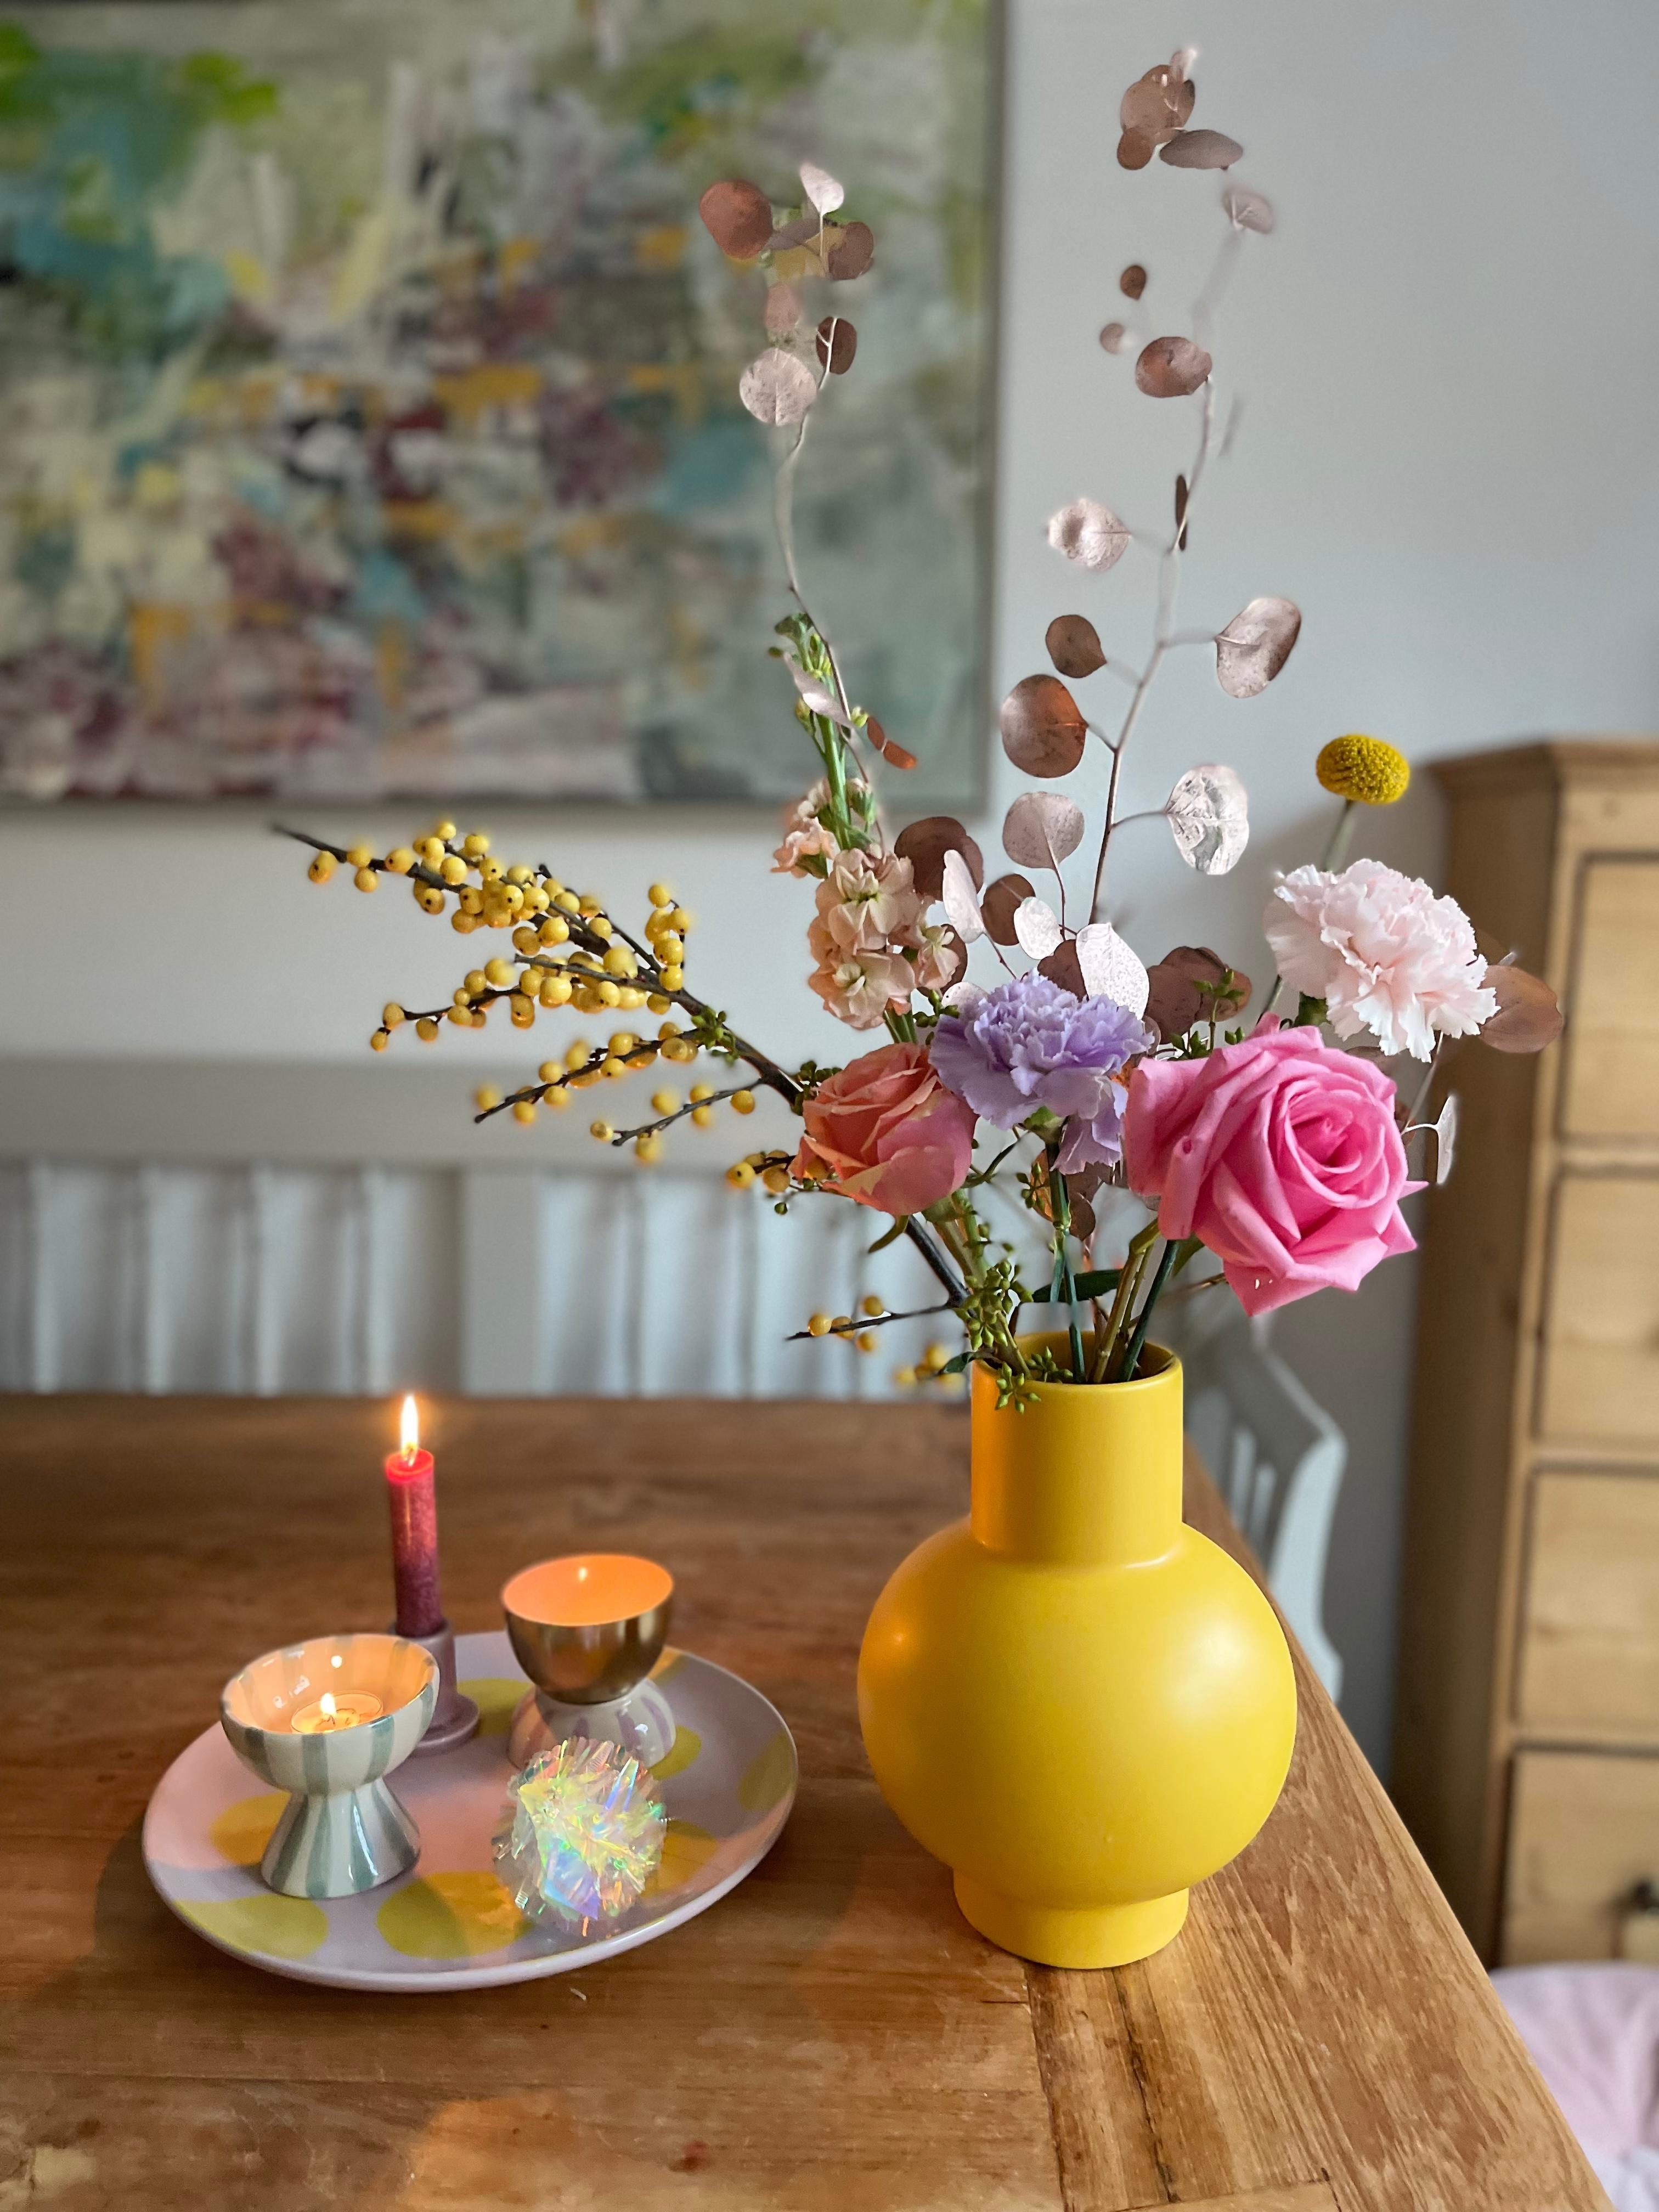 #Colourfulchrismas #colourfulxmas #xmasflowers #cheers2colour #farbenfröhliche #weihnacht #candlelightseason #kerzen